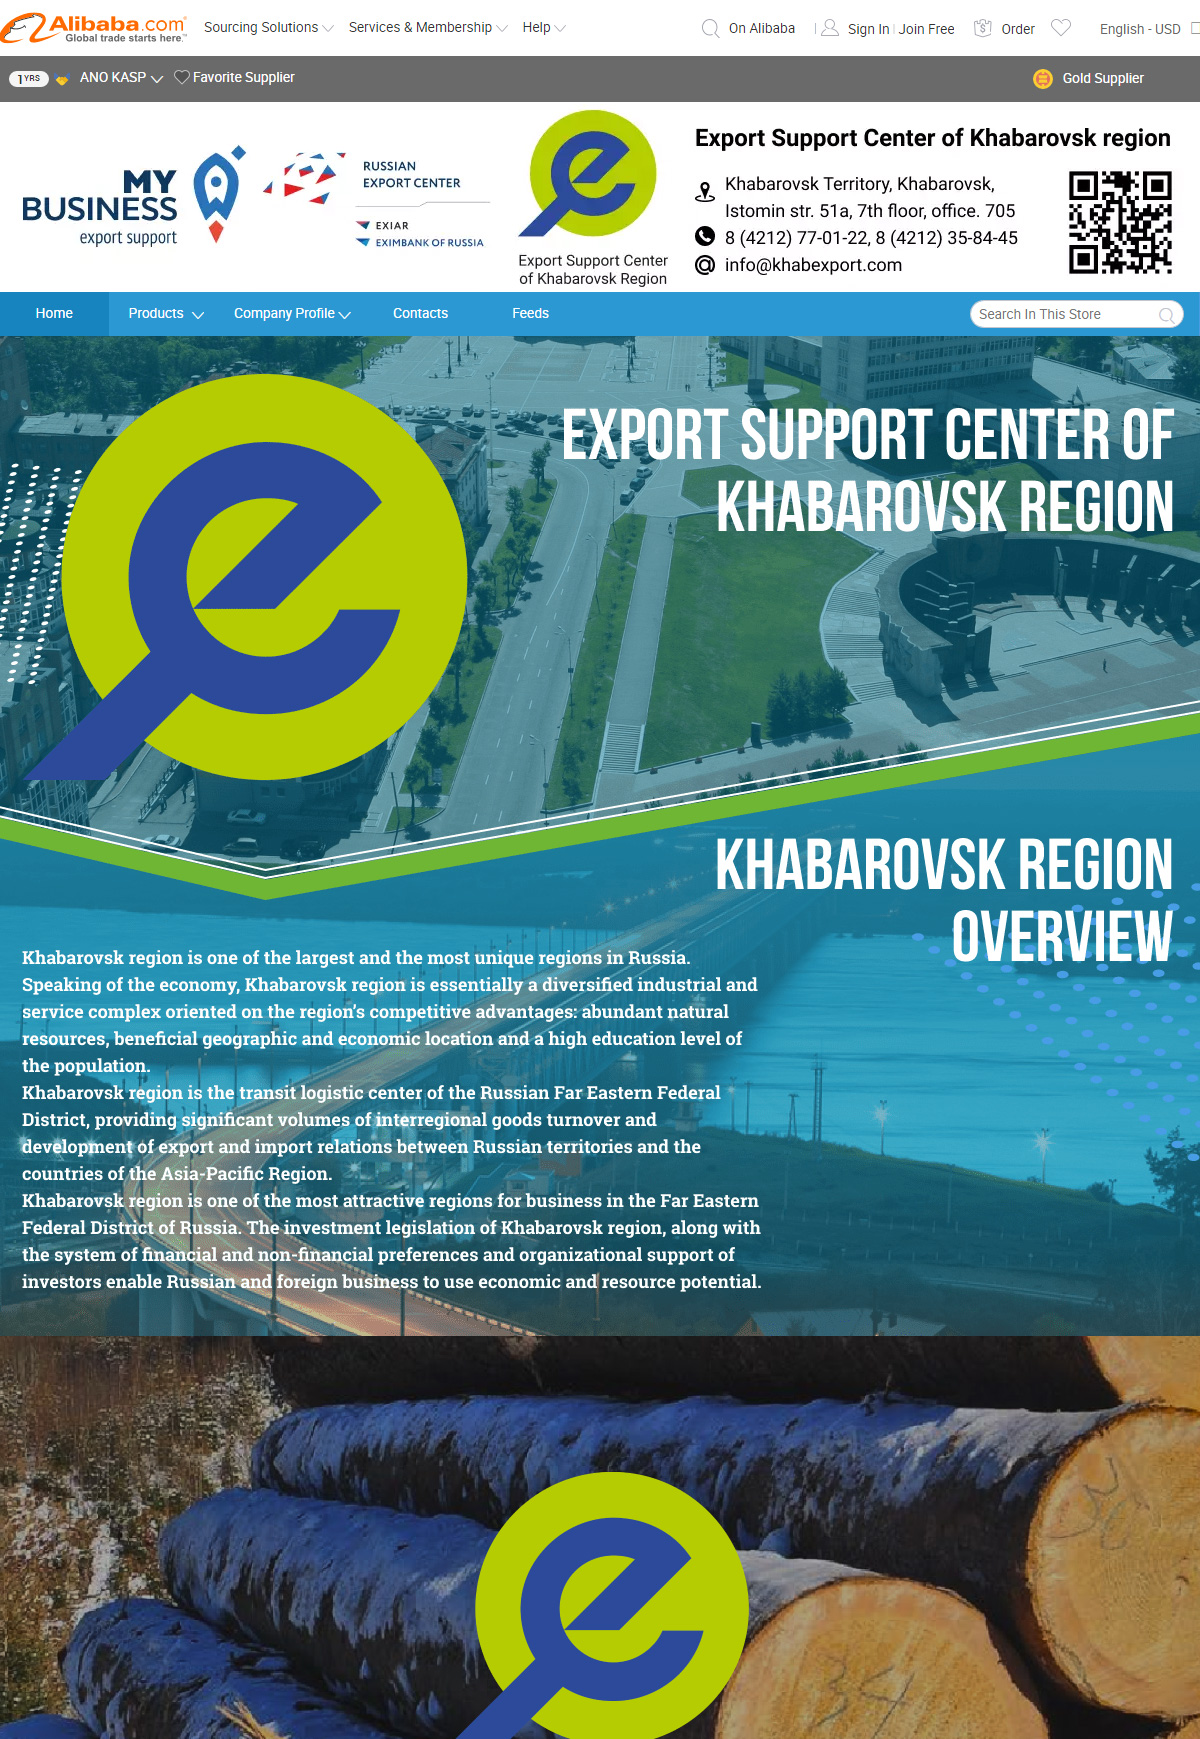 Export support and development center of Khabarovsk Krai на Алибаба